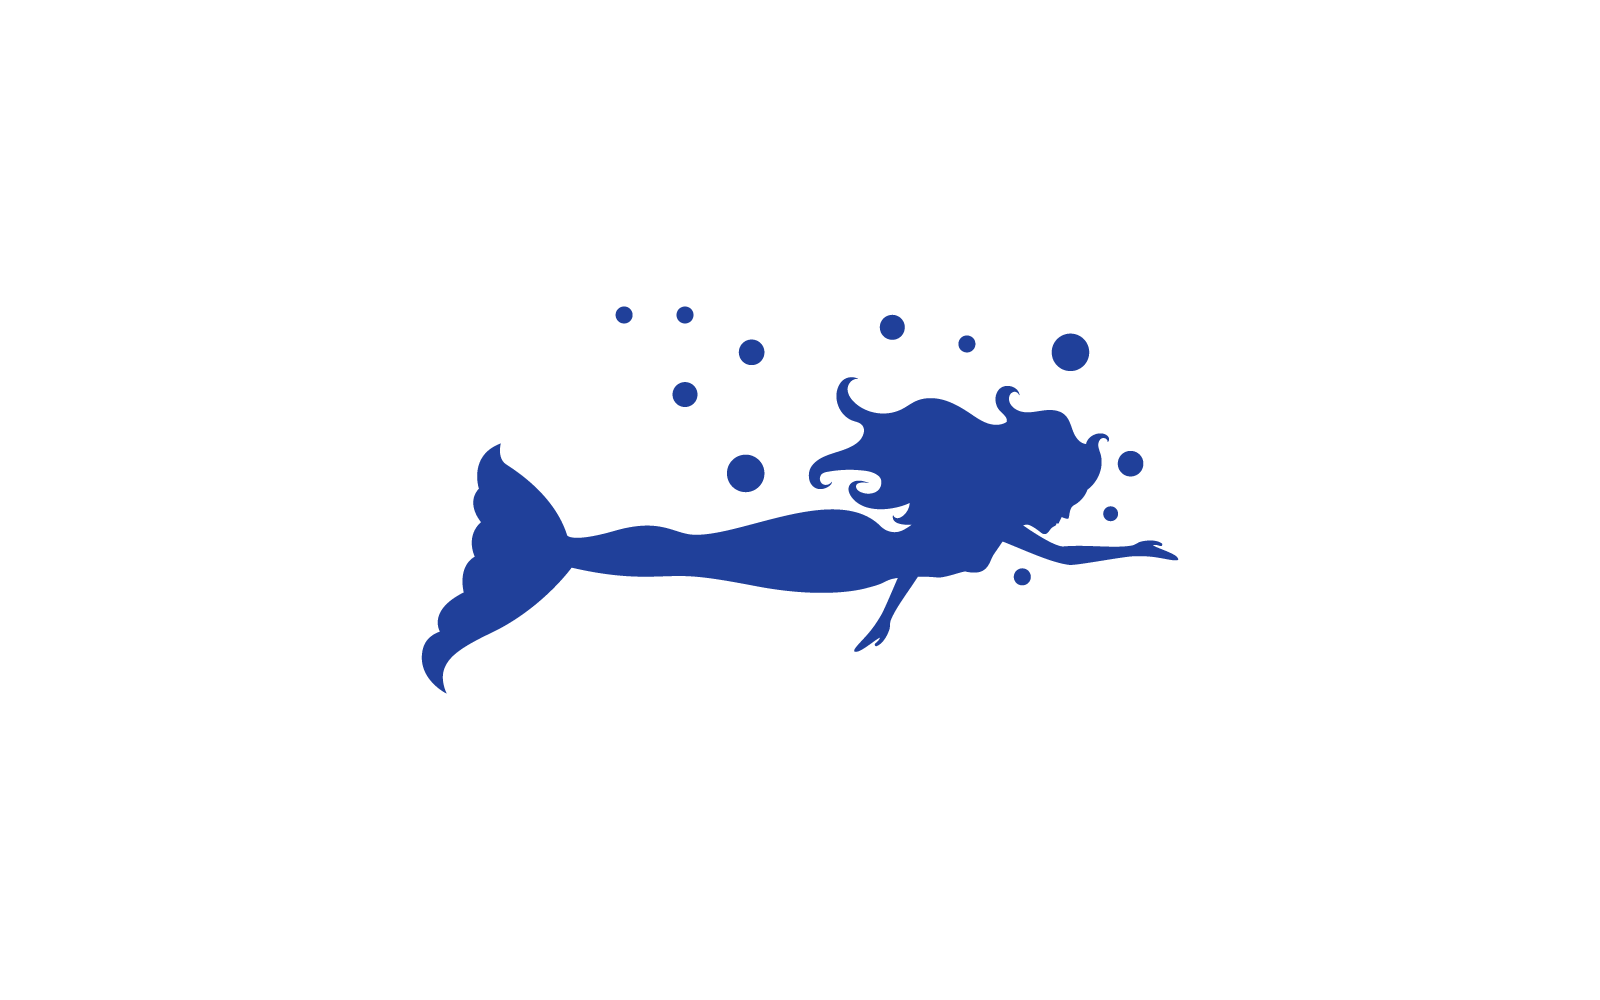 Mermaid illustration logo vector icon flat design